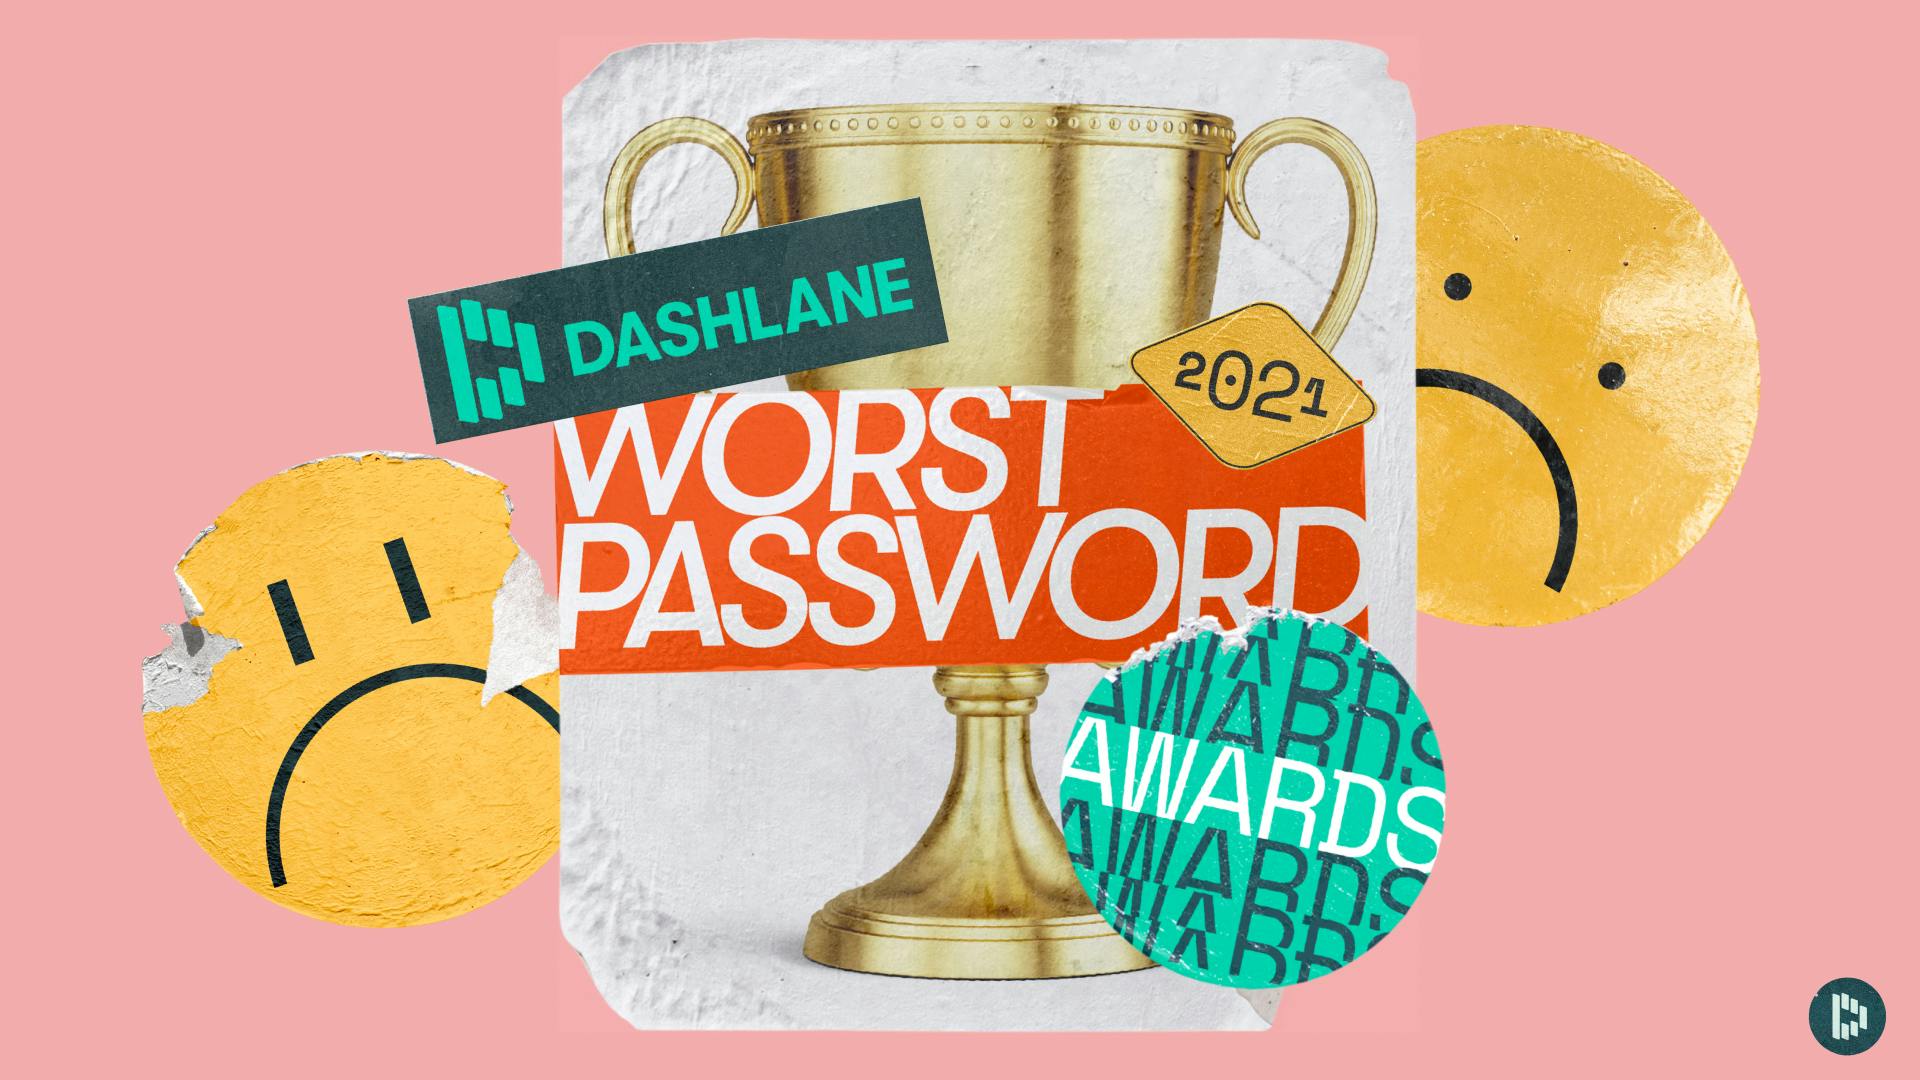 Worst Password Awards 2021